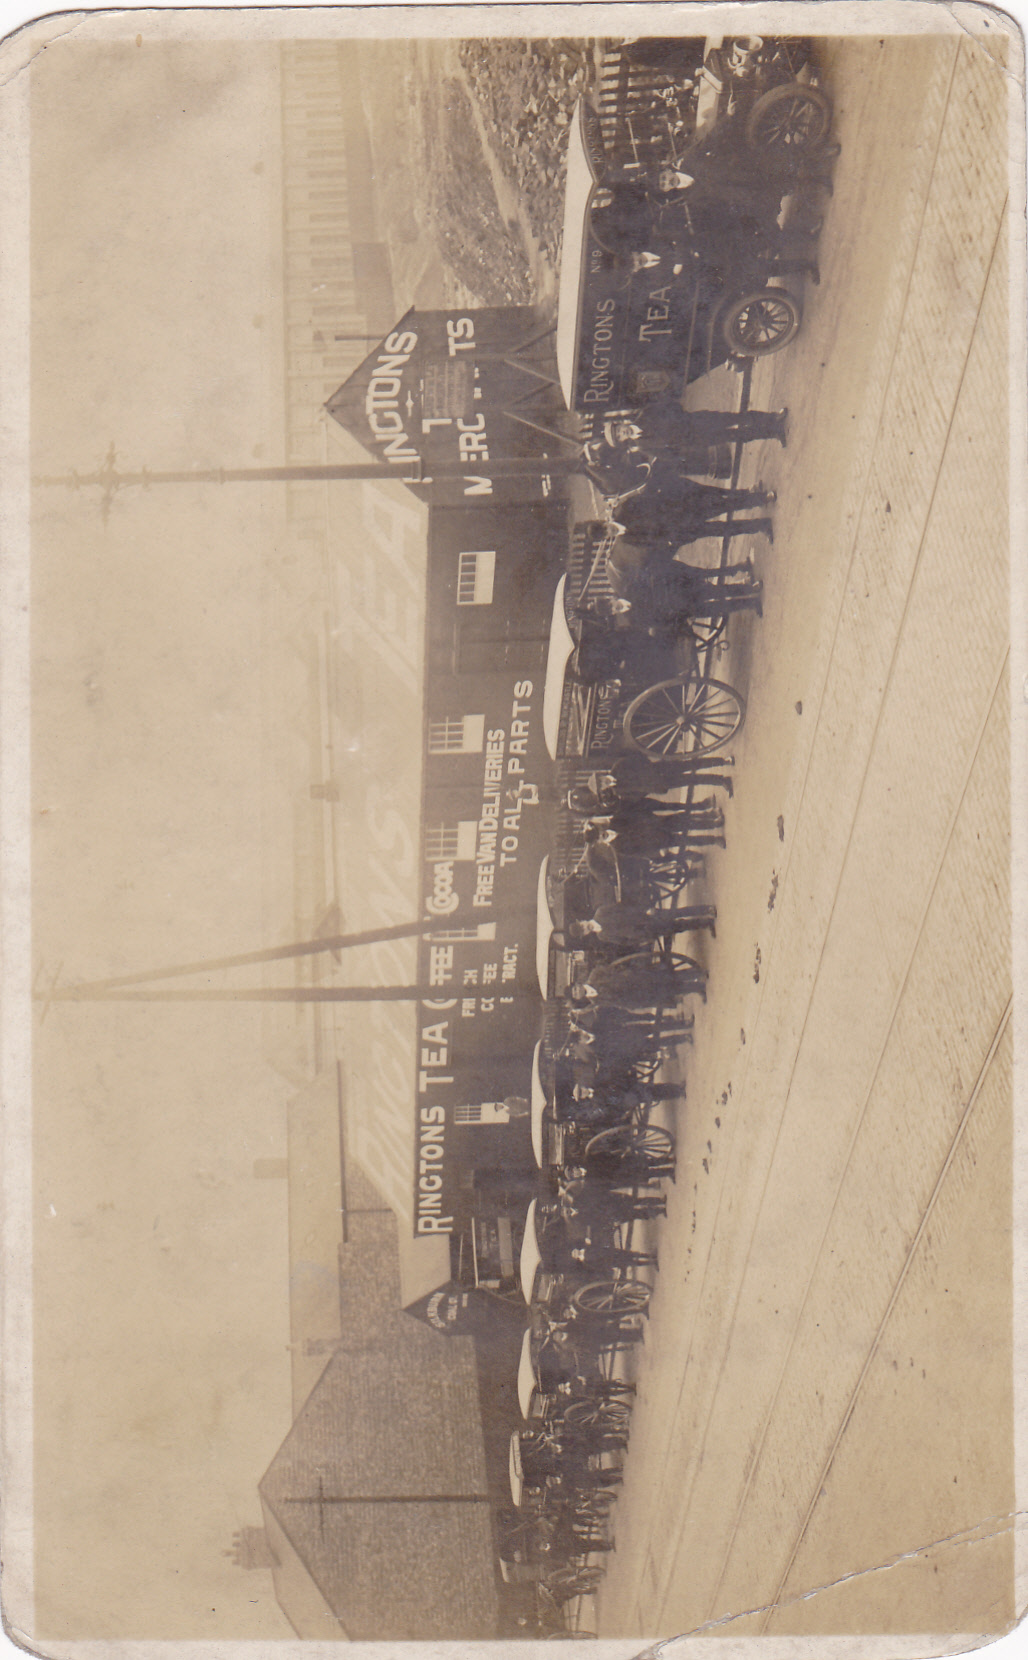 Ringtons' Shields Rd premises c 1910